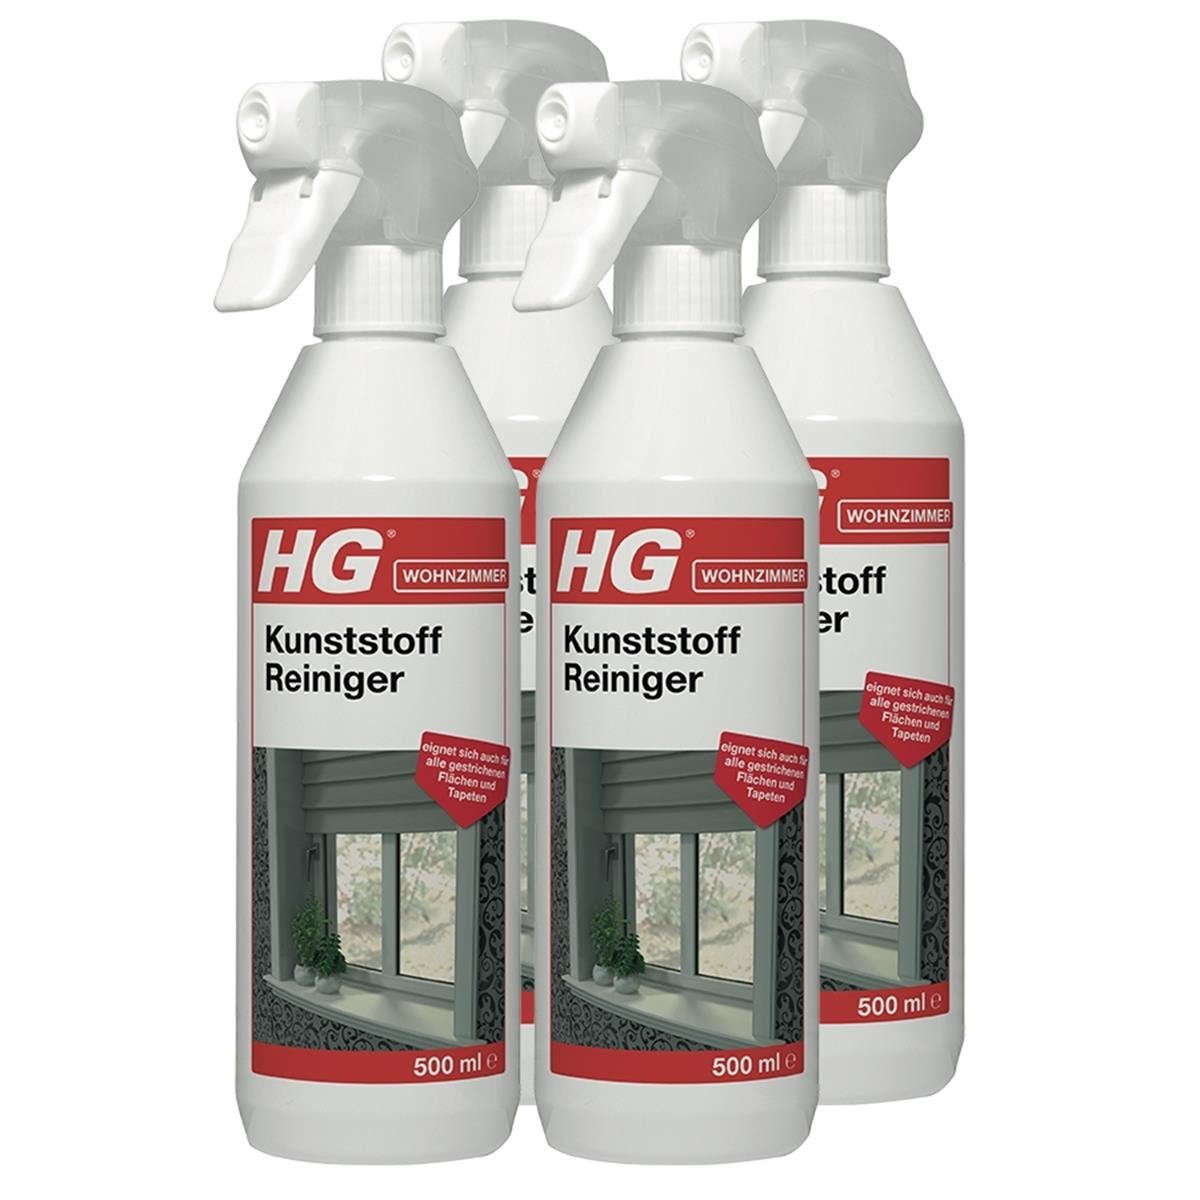 HG HG Kunststoff Reiniger 500ml - Für Kunststoffe oder Polycarbonate (4er  Allzweckreiniger